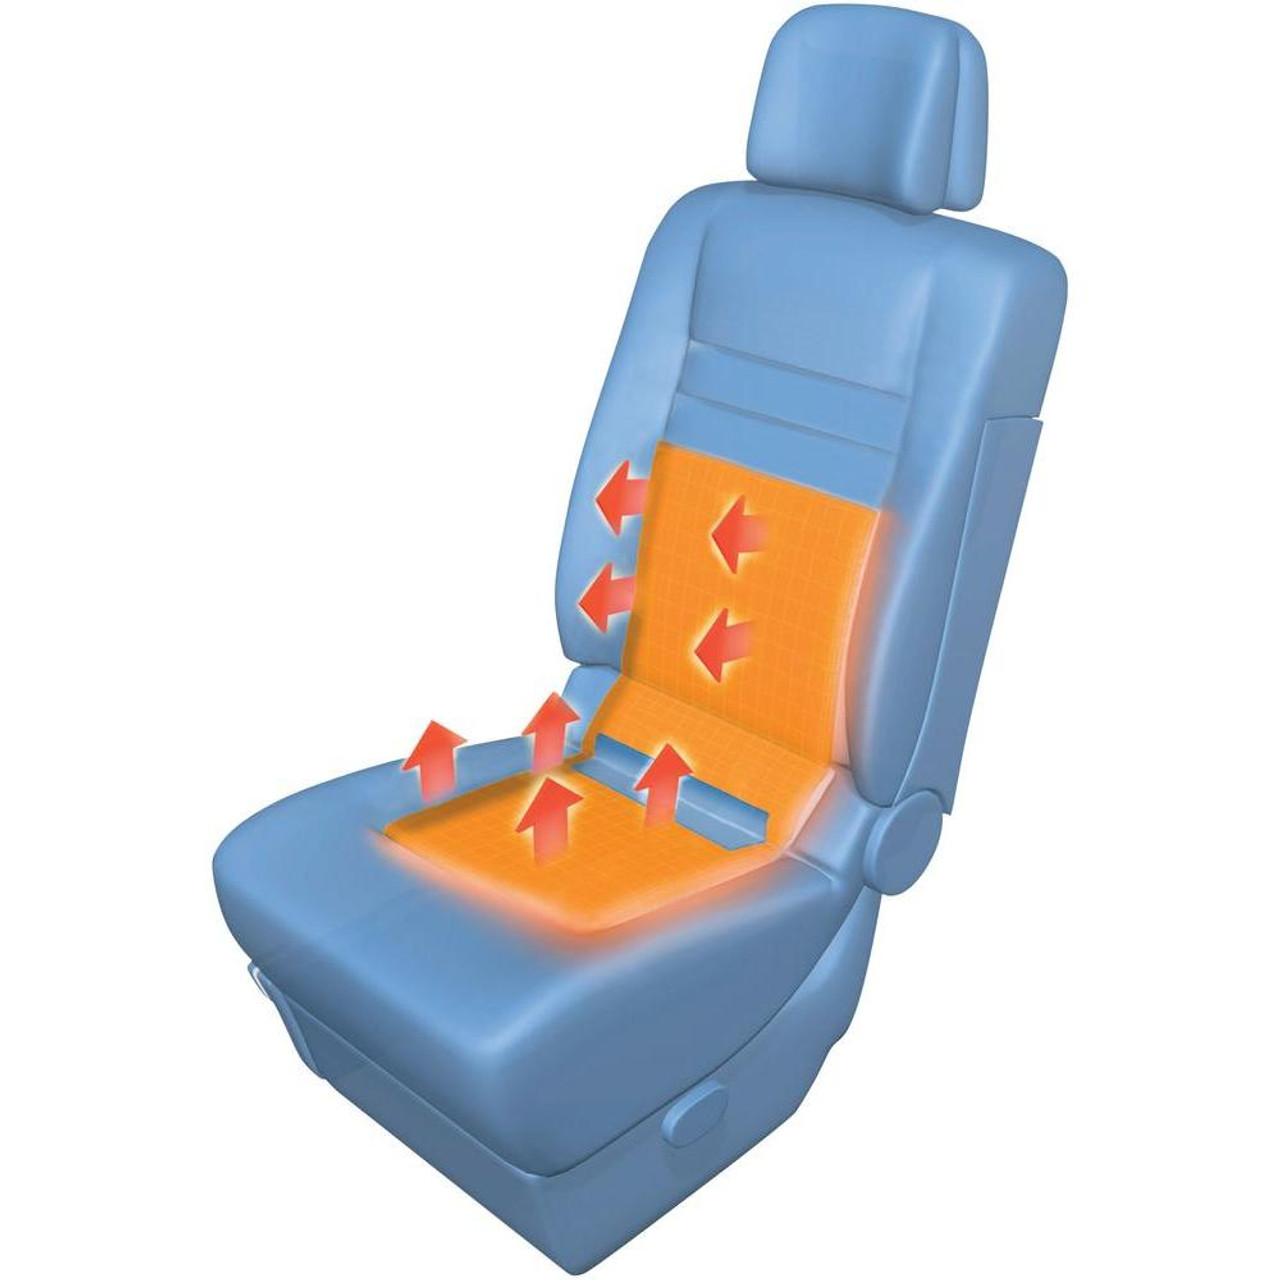 Dometic Waeco Magic Comfort MSH60 Heated Car Seat Kit